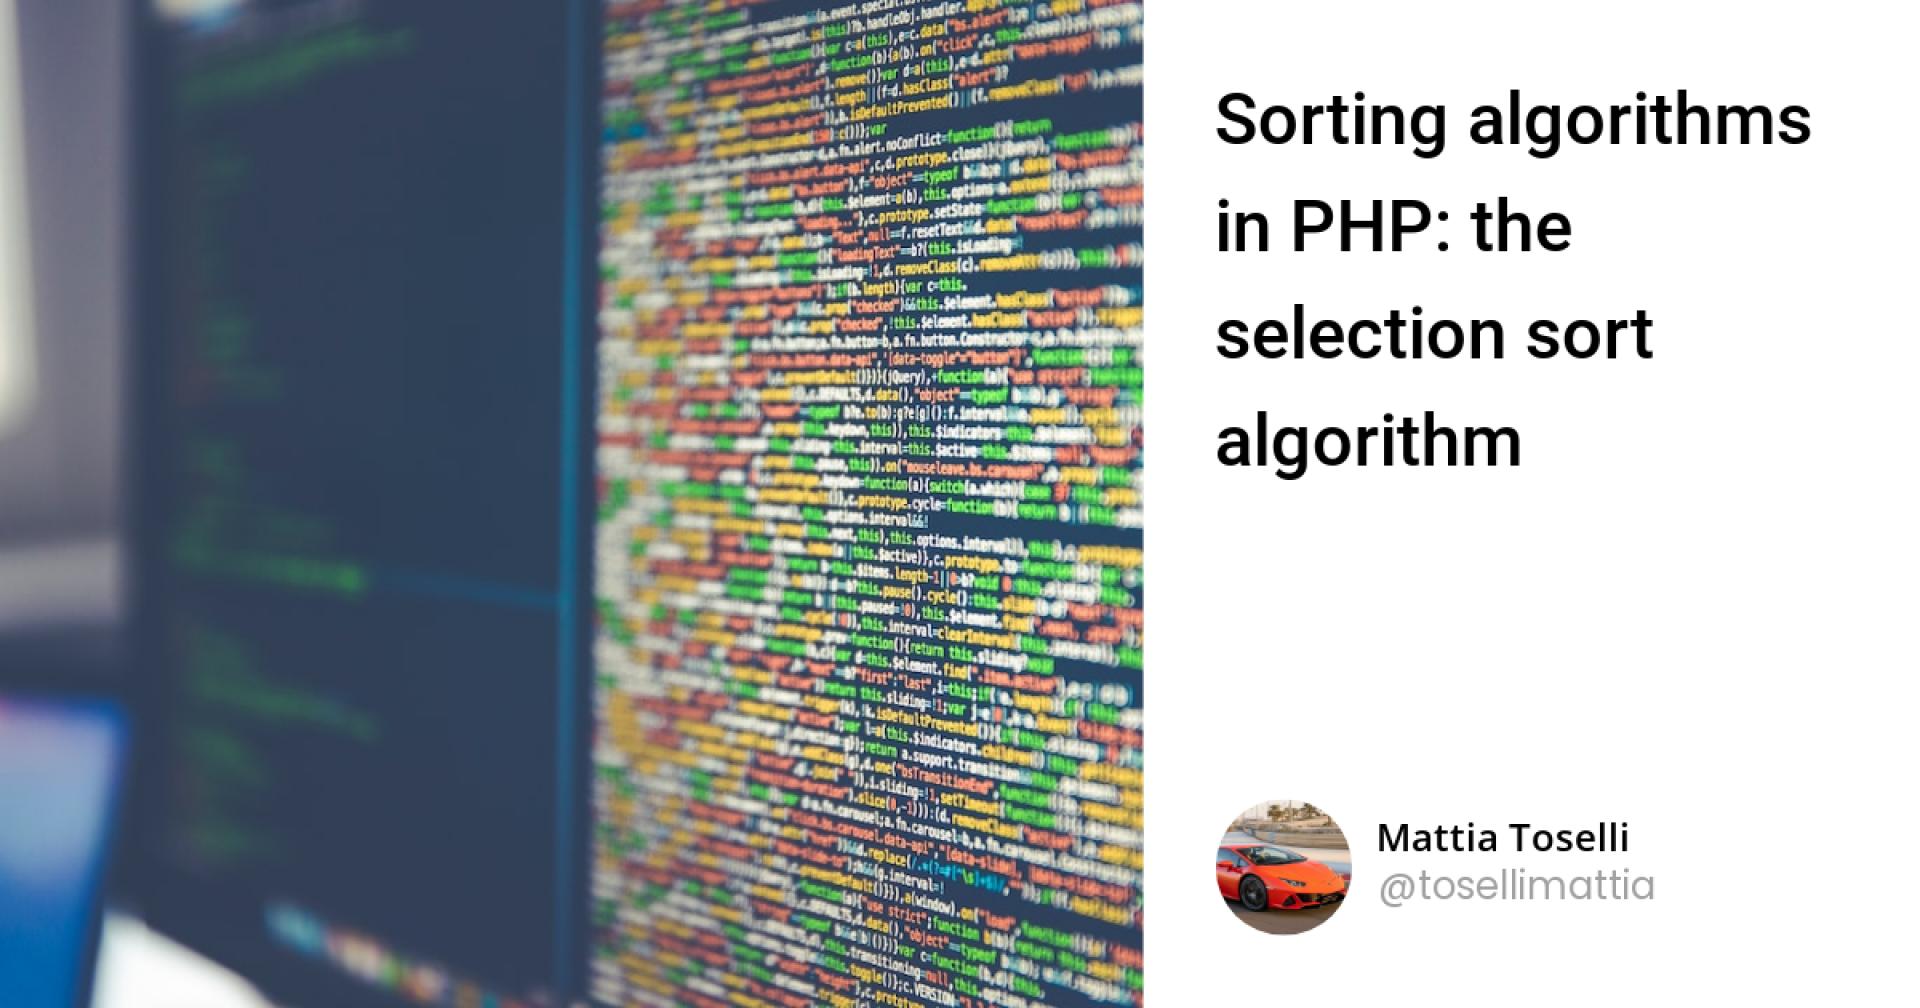 Sorting algorithms in PHP: the selection sort algorithm